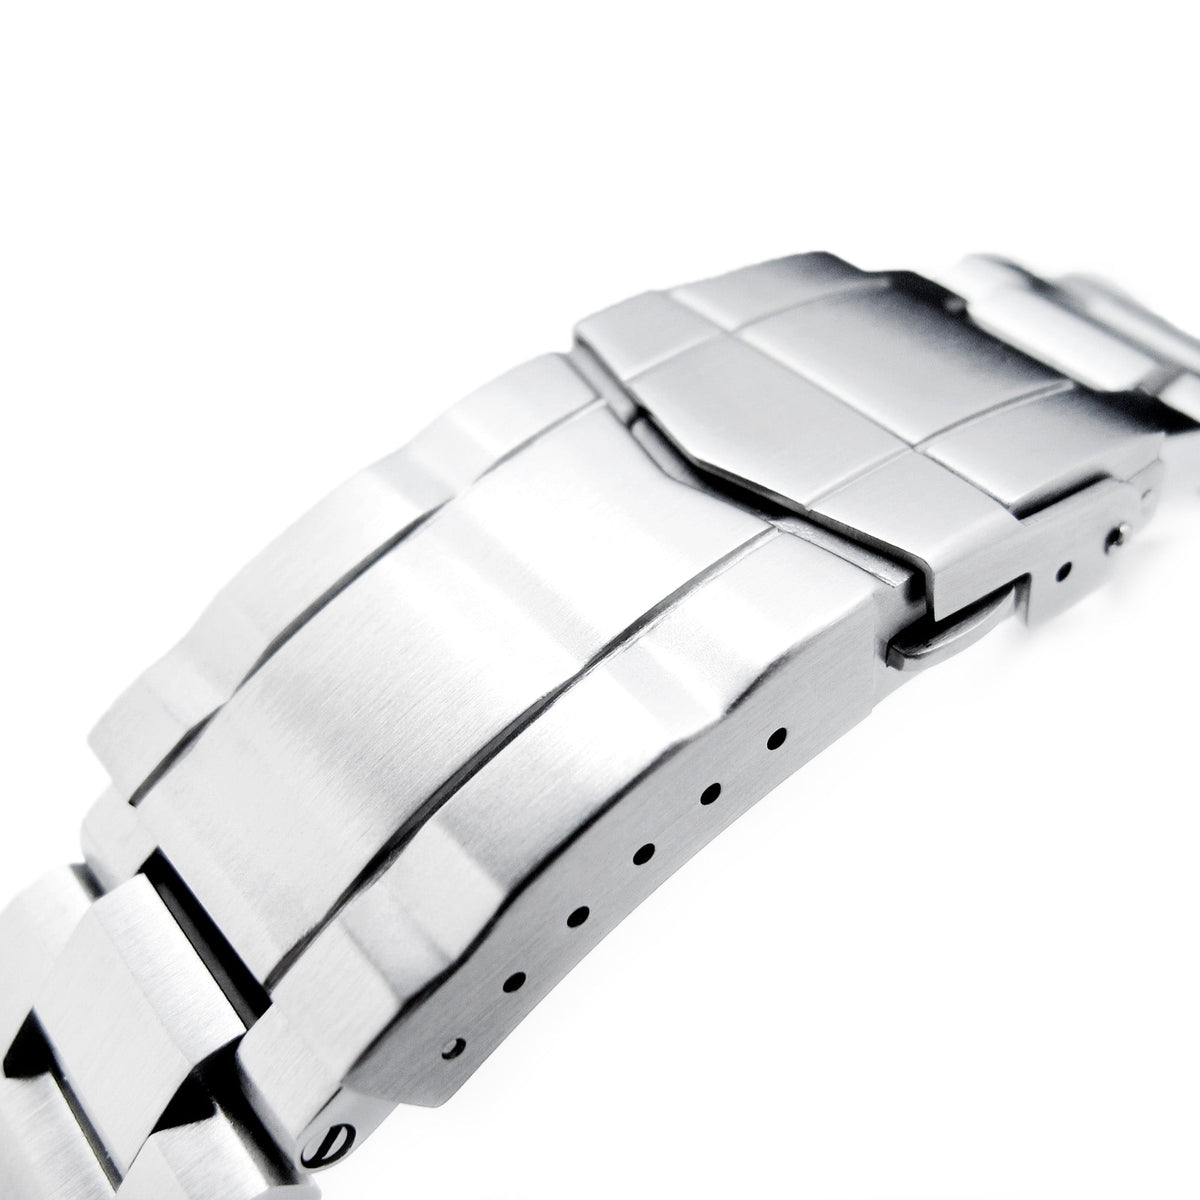 Seiko Samurai SRPB51 Curved End Bracelets SRPB55 PVD Black | Strapcode